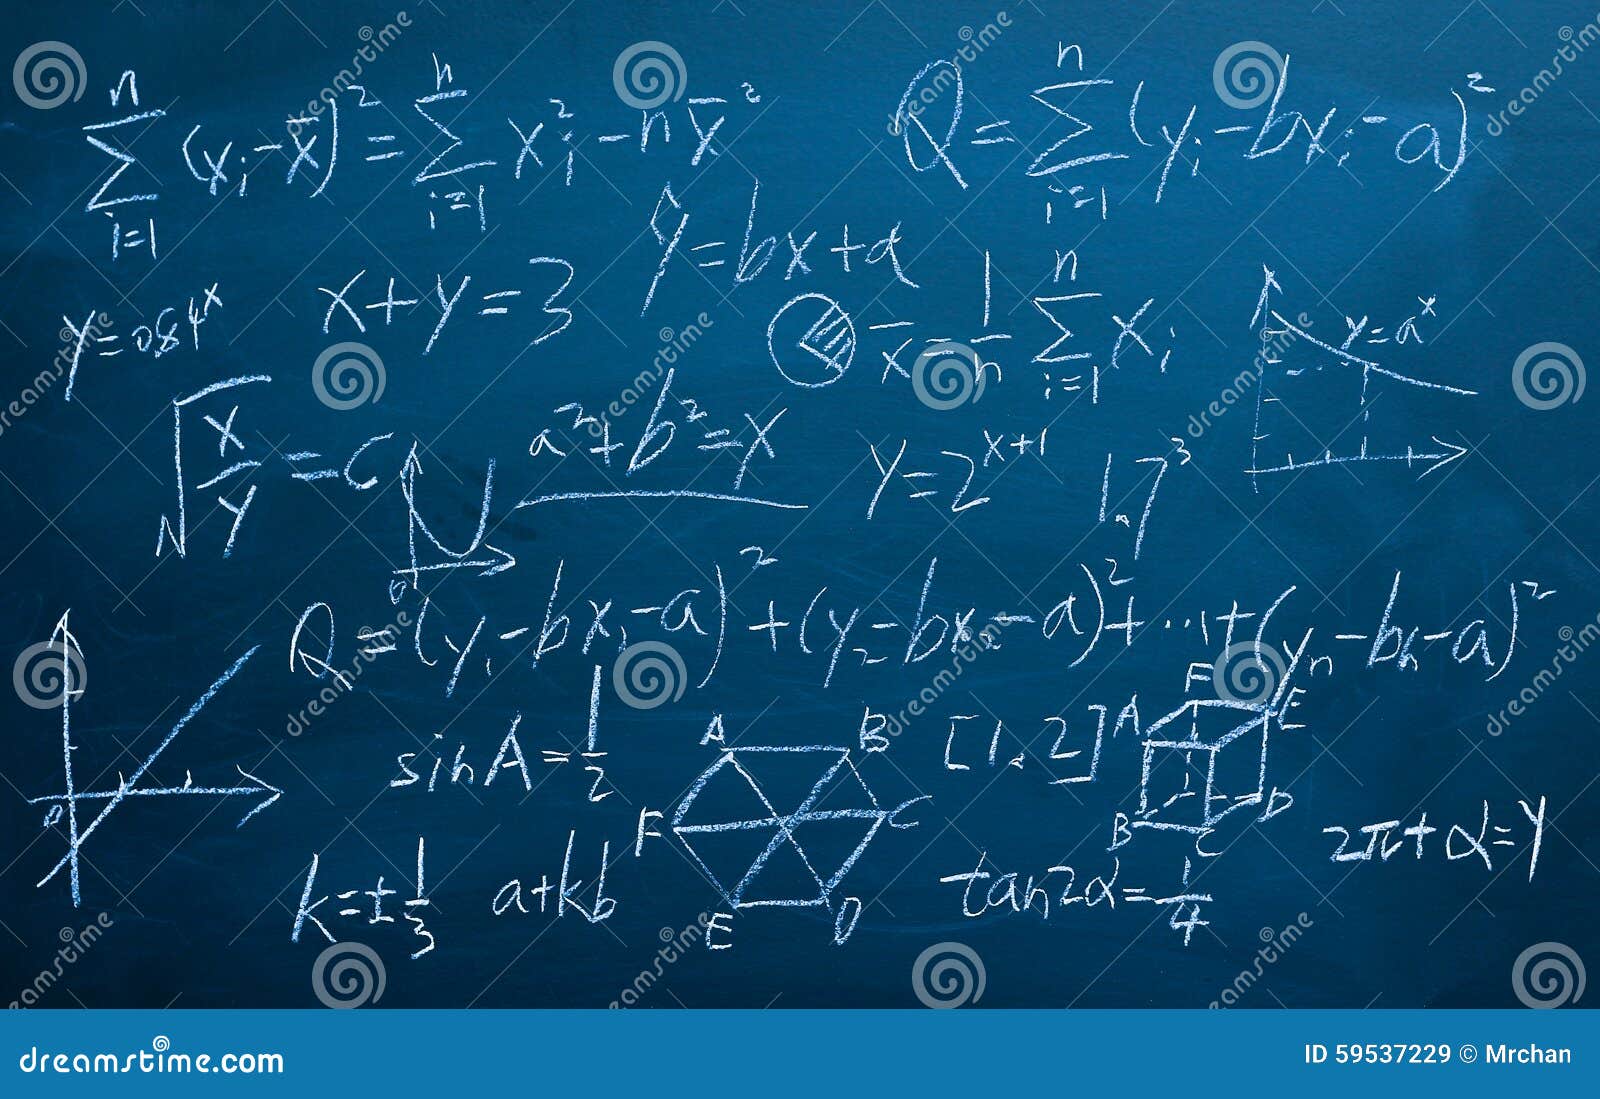 maths formulas on chalkboard background